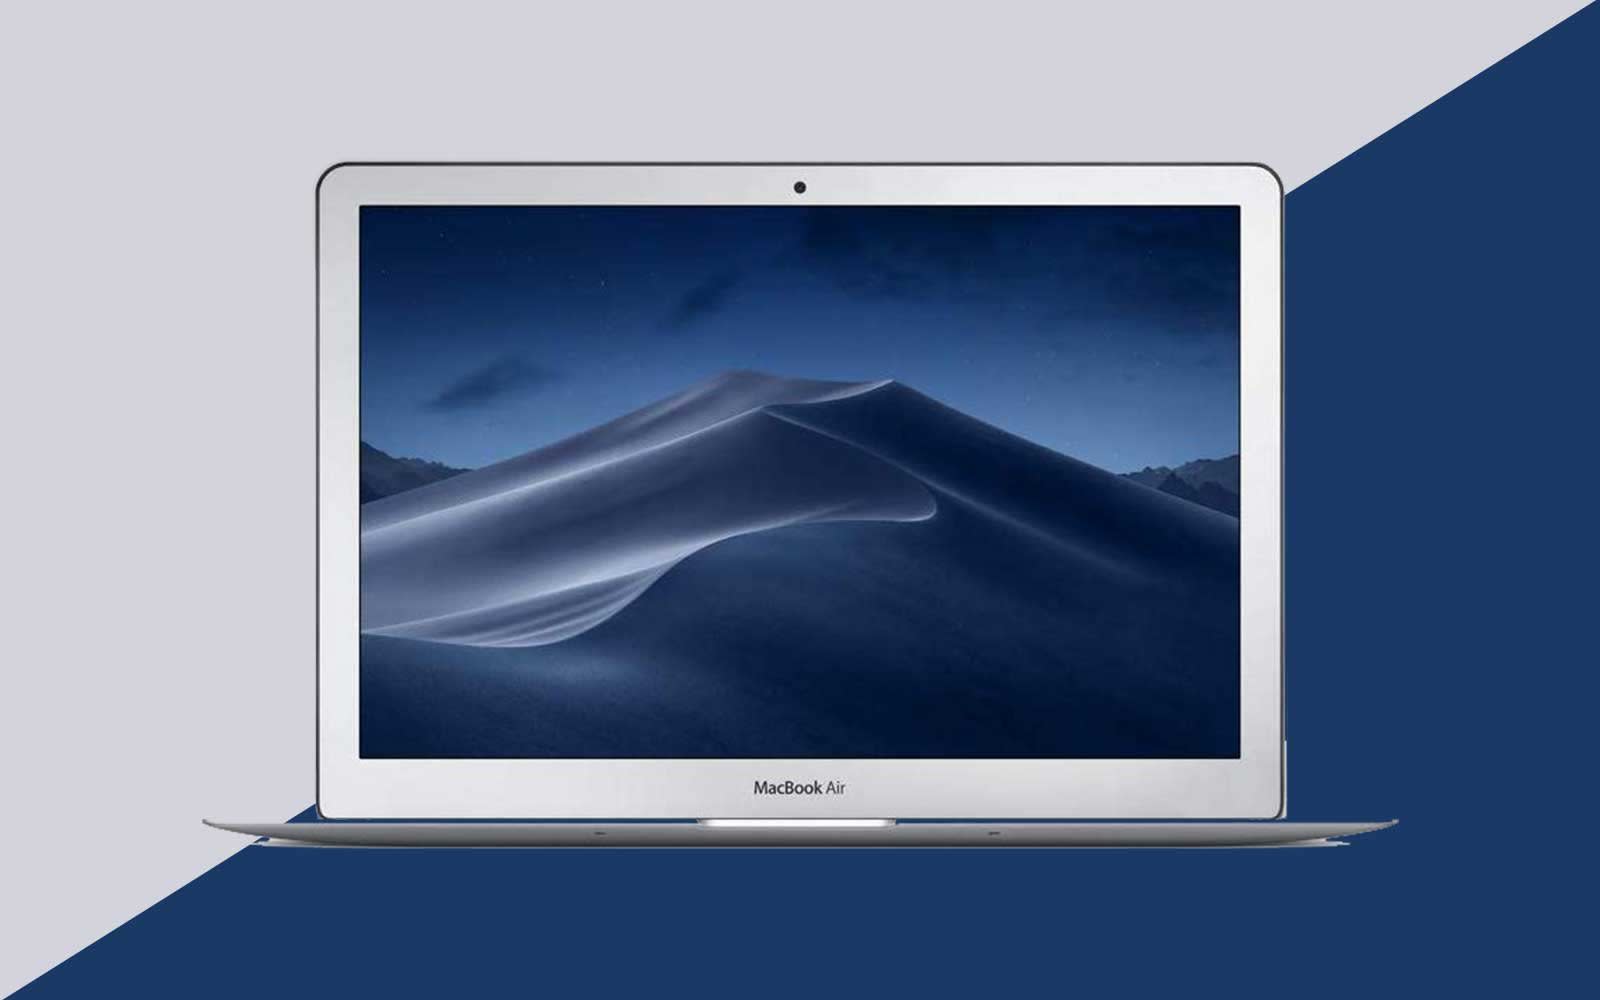 MacBook Black Friday Deals: Save on Apple Laptops on Amazon